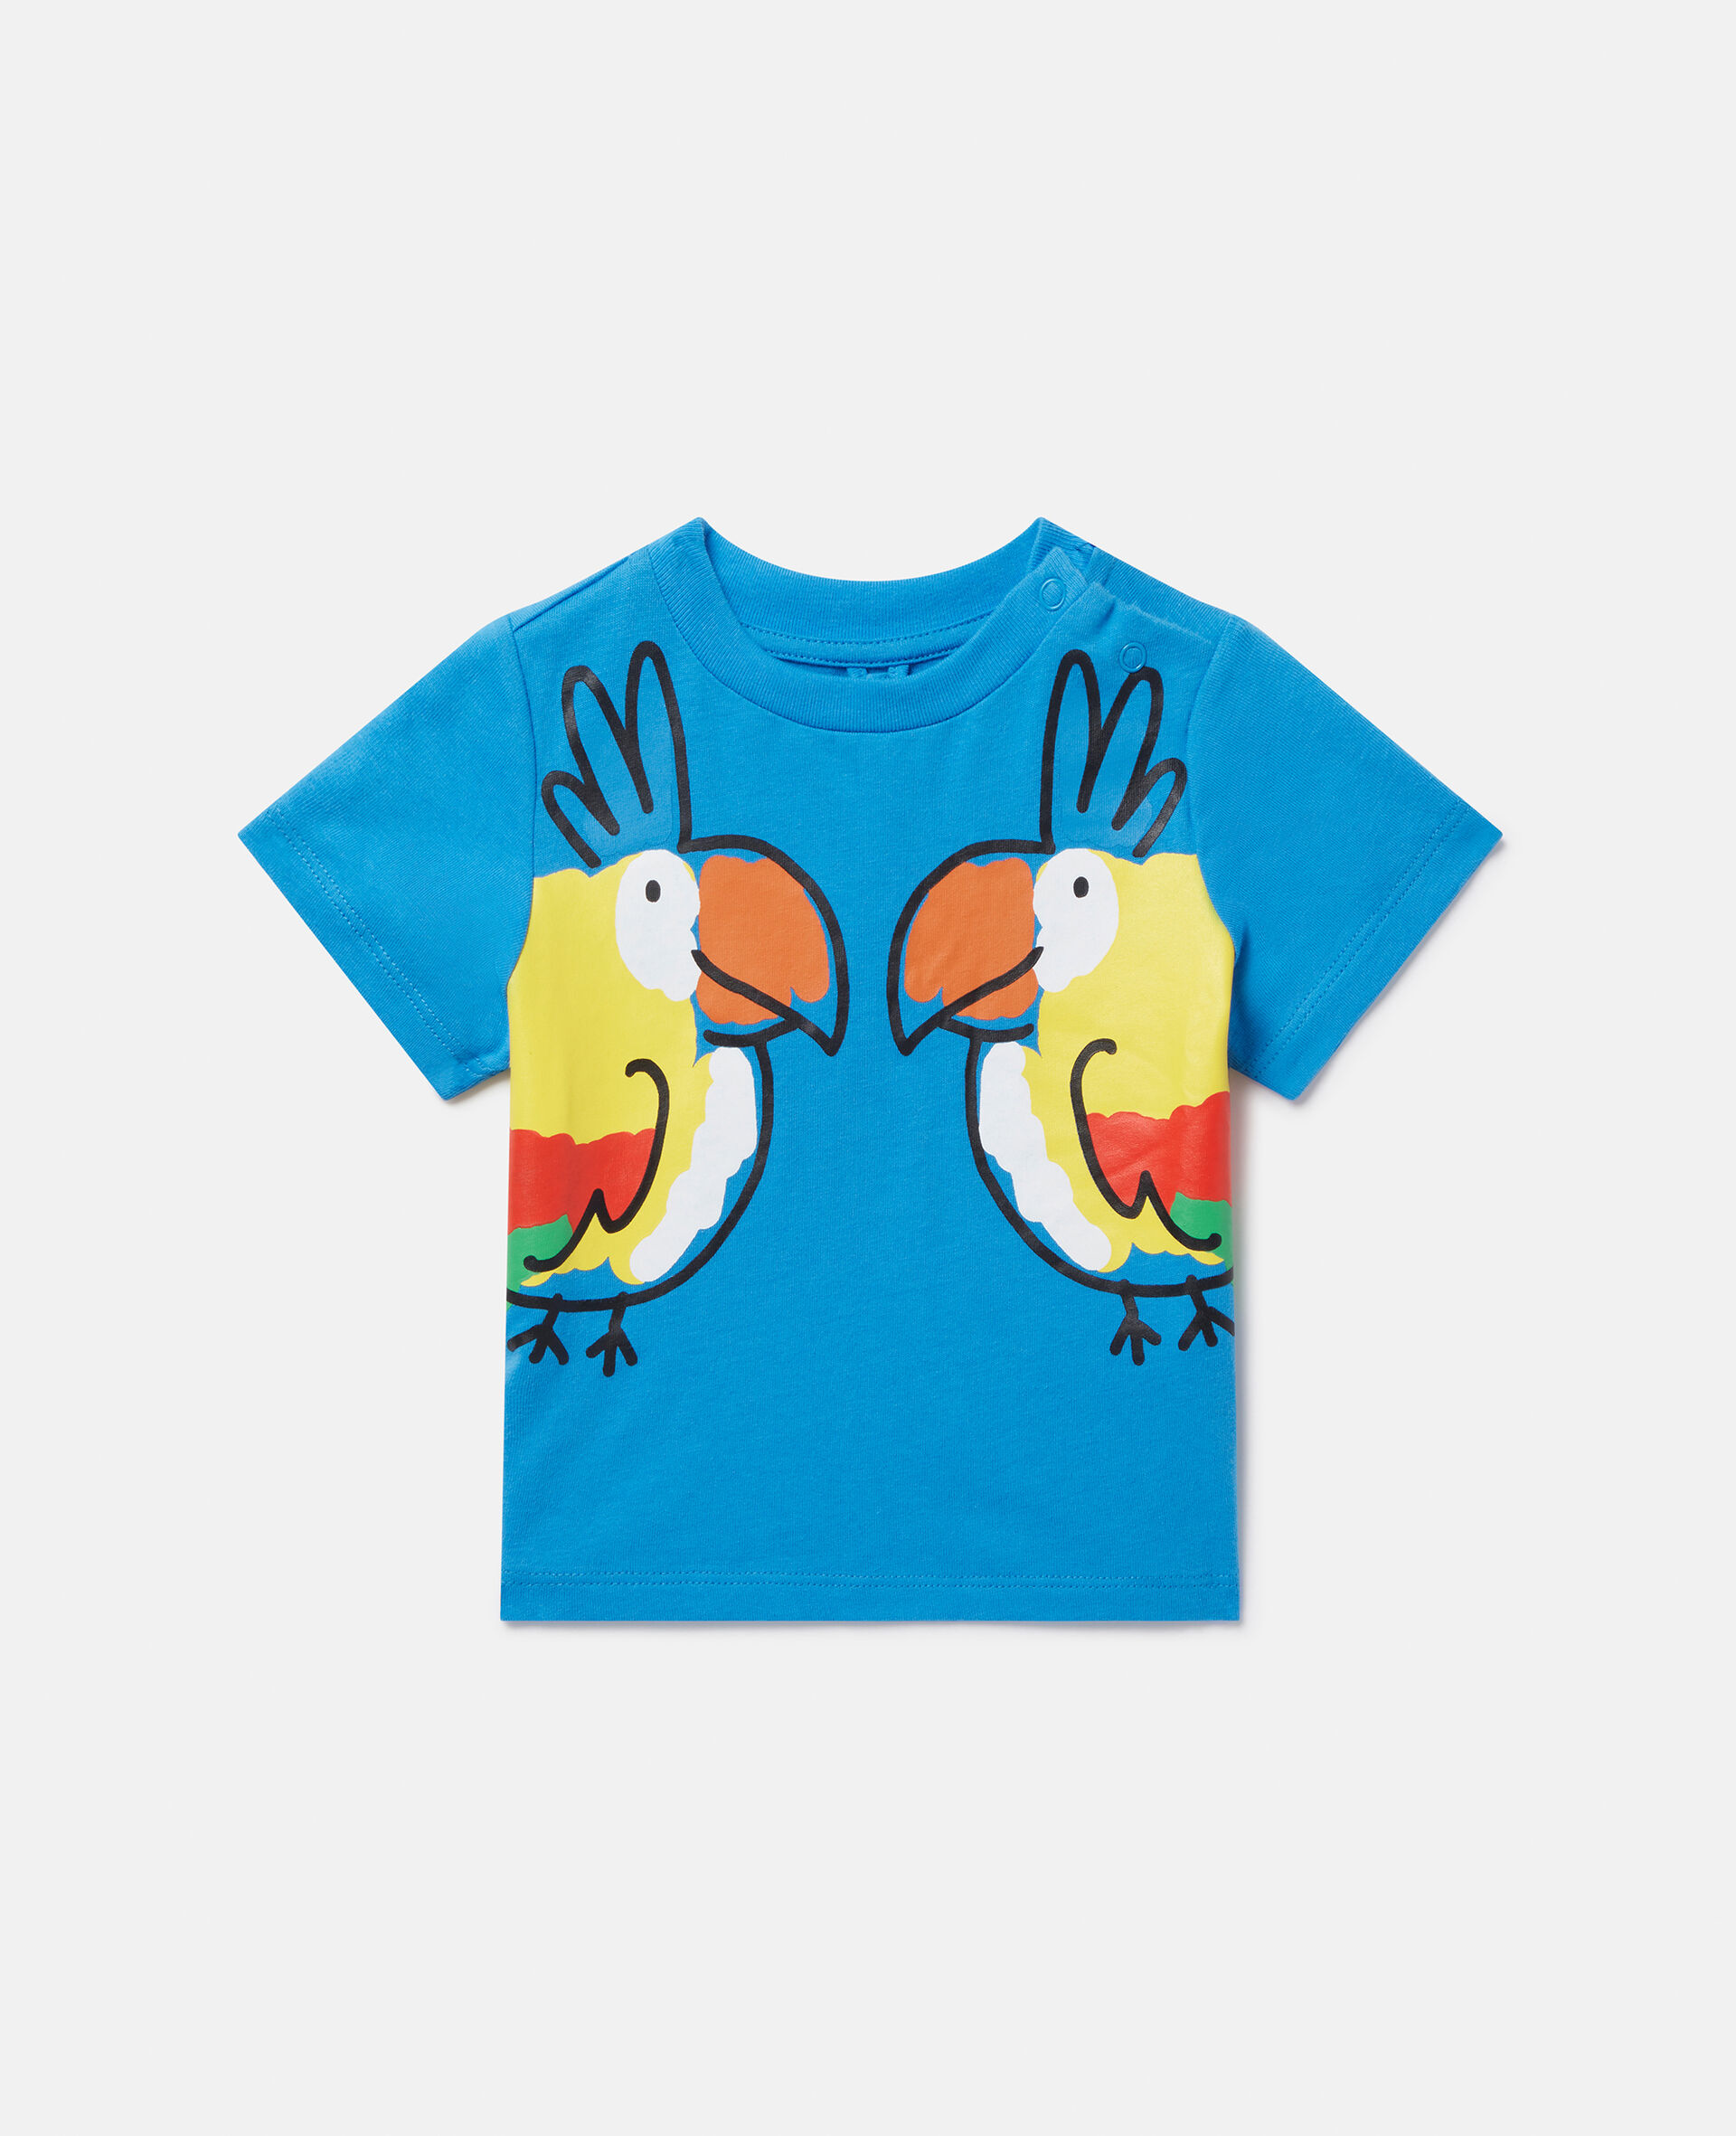 Double Baby Parrot Print T-Shirt-Blue-large